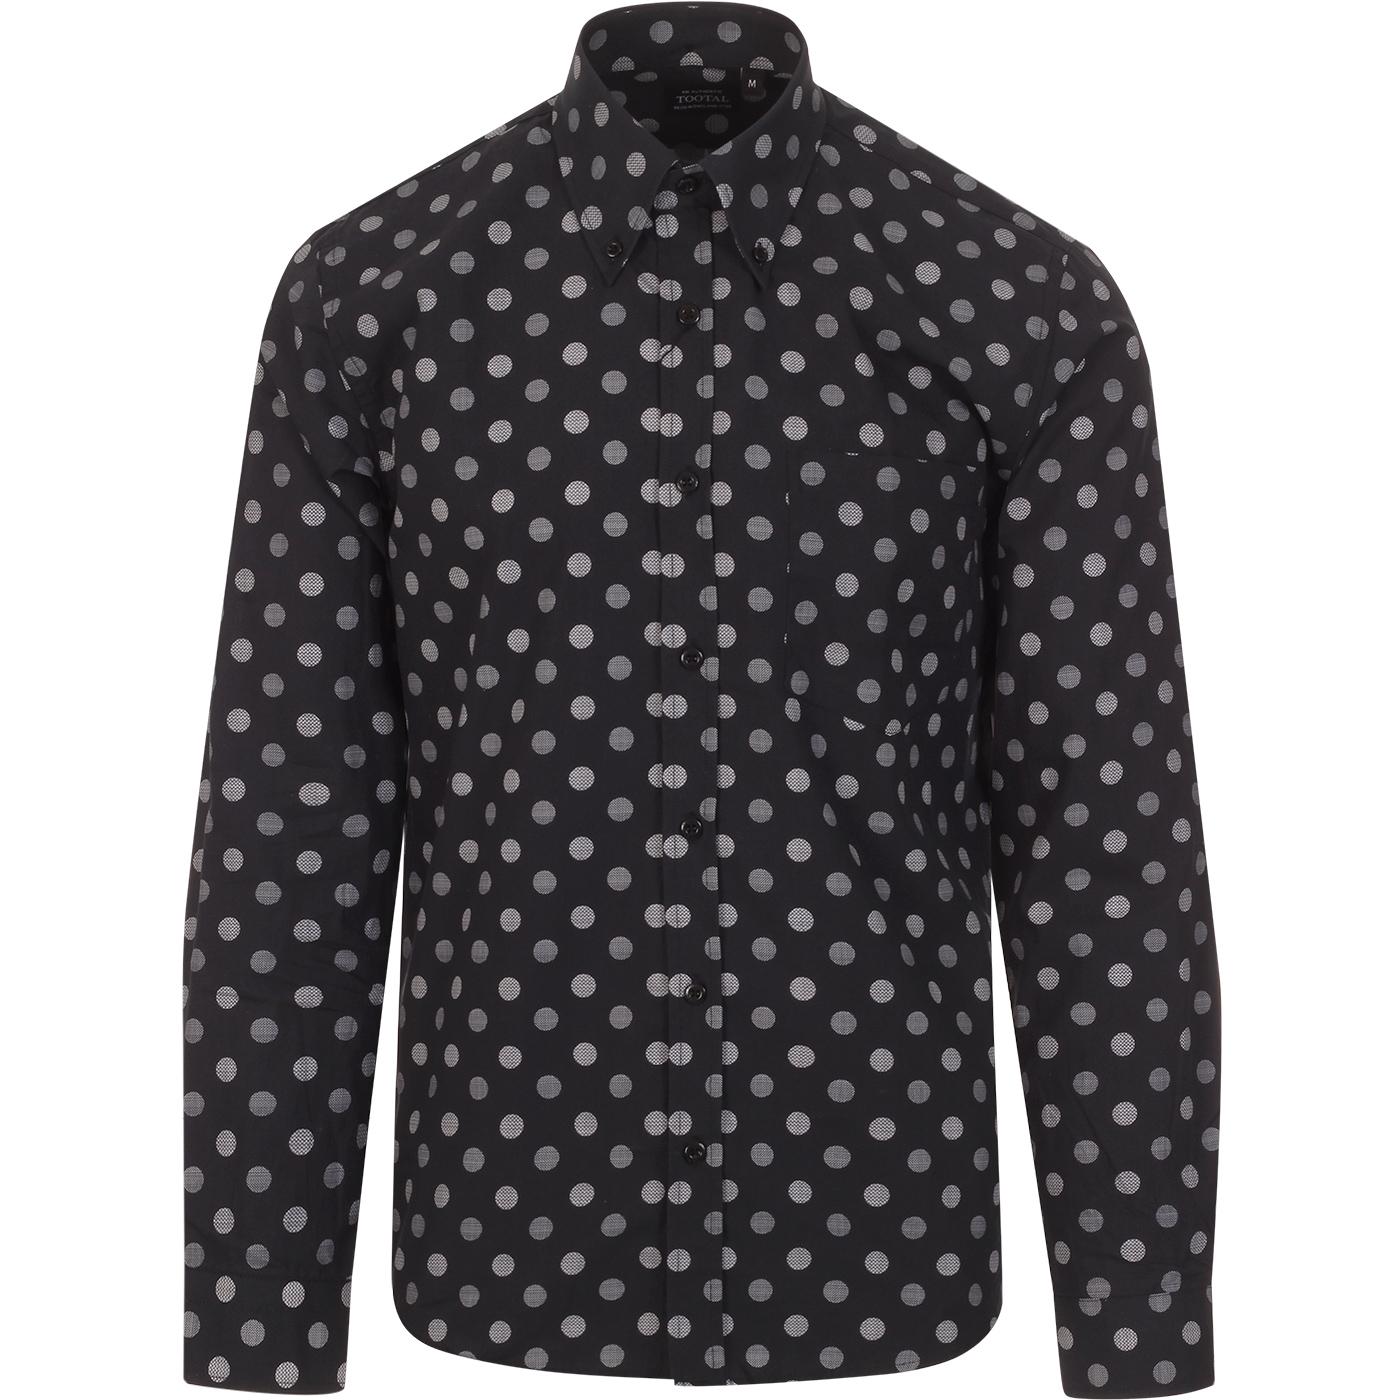 TOOTAL Men's Retro Mod Textured Polka Dot Shirt in Black